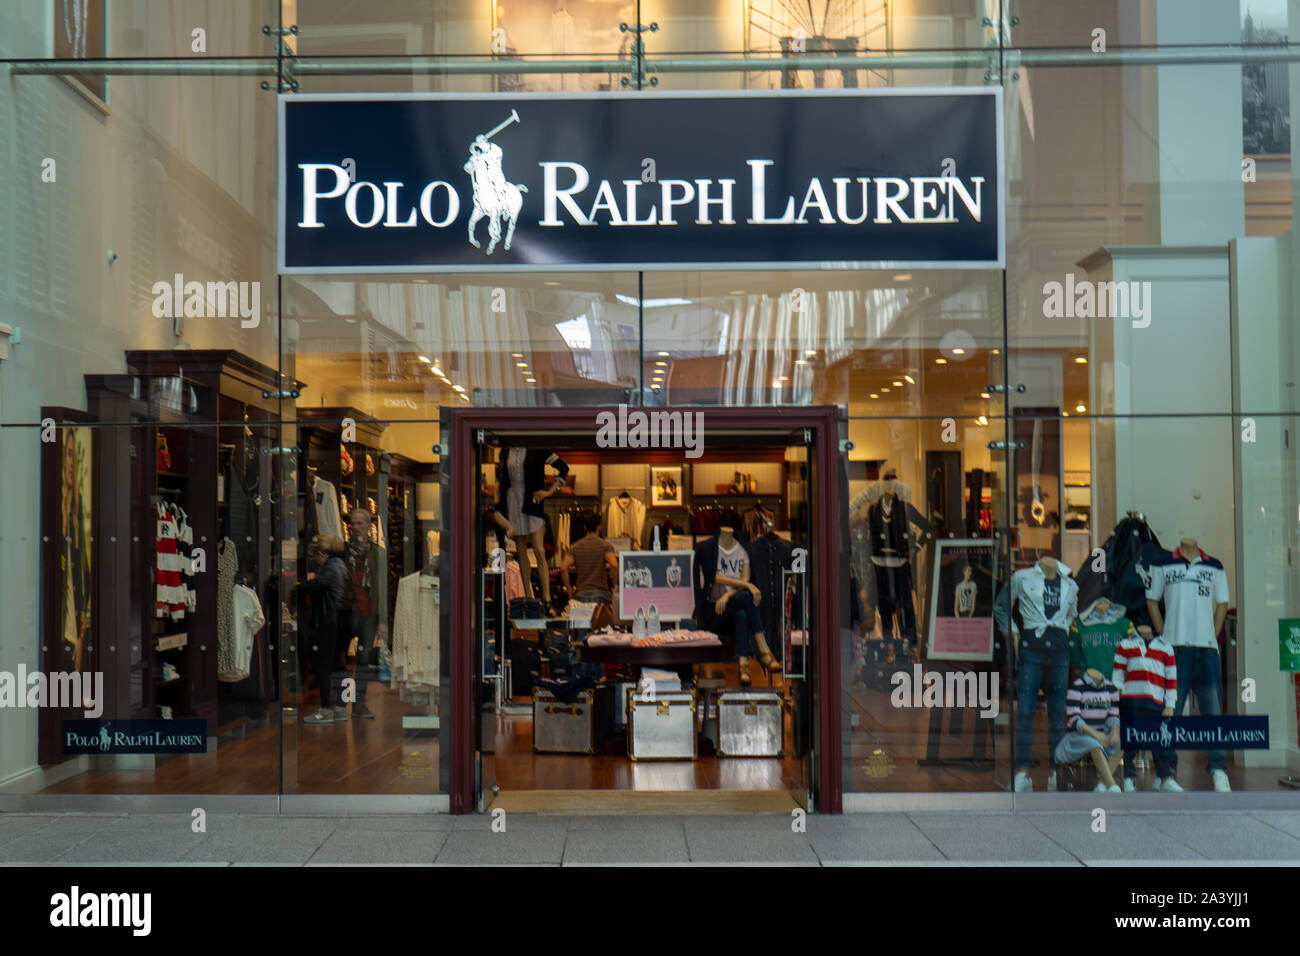 polo ralph lauren fashion outlet